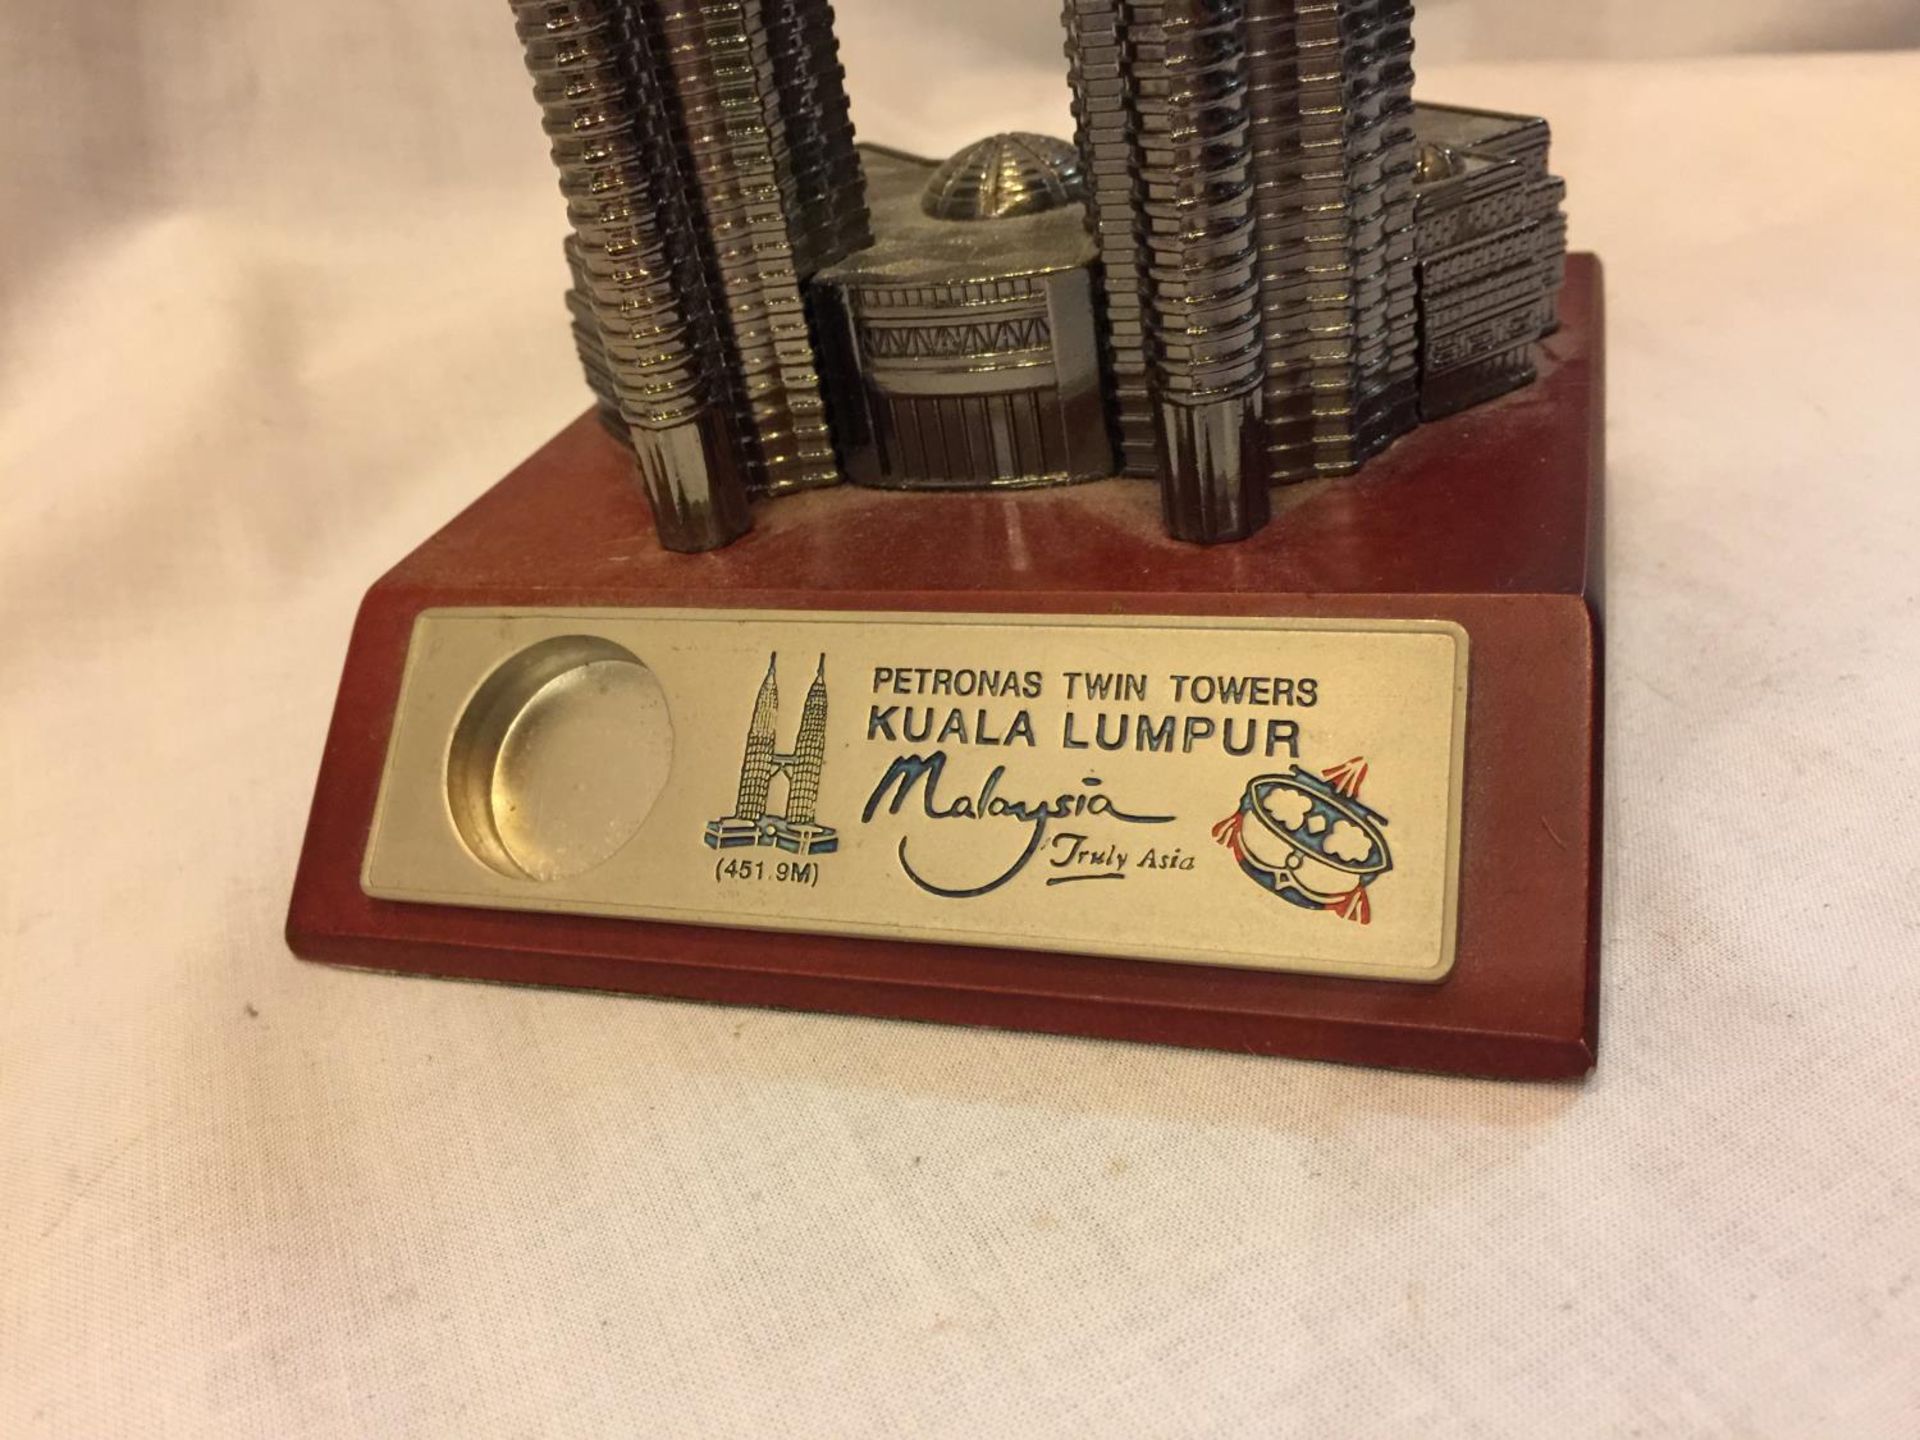 A MODEL OF THE TWIN TOWERS KUALA LUMPUR, MALAYSIA - Image 4 of 5